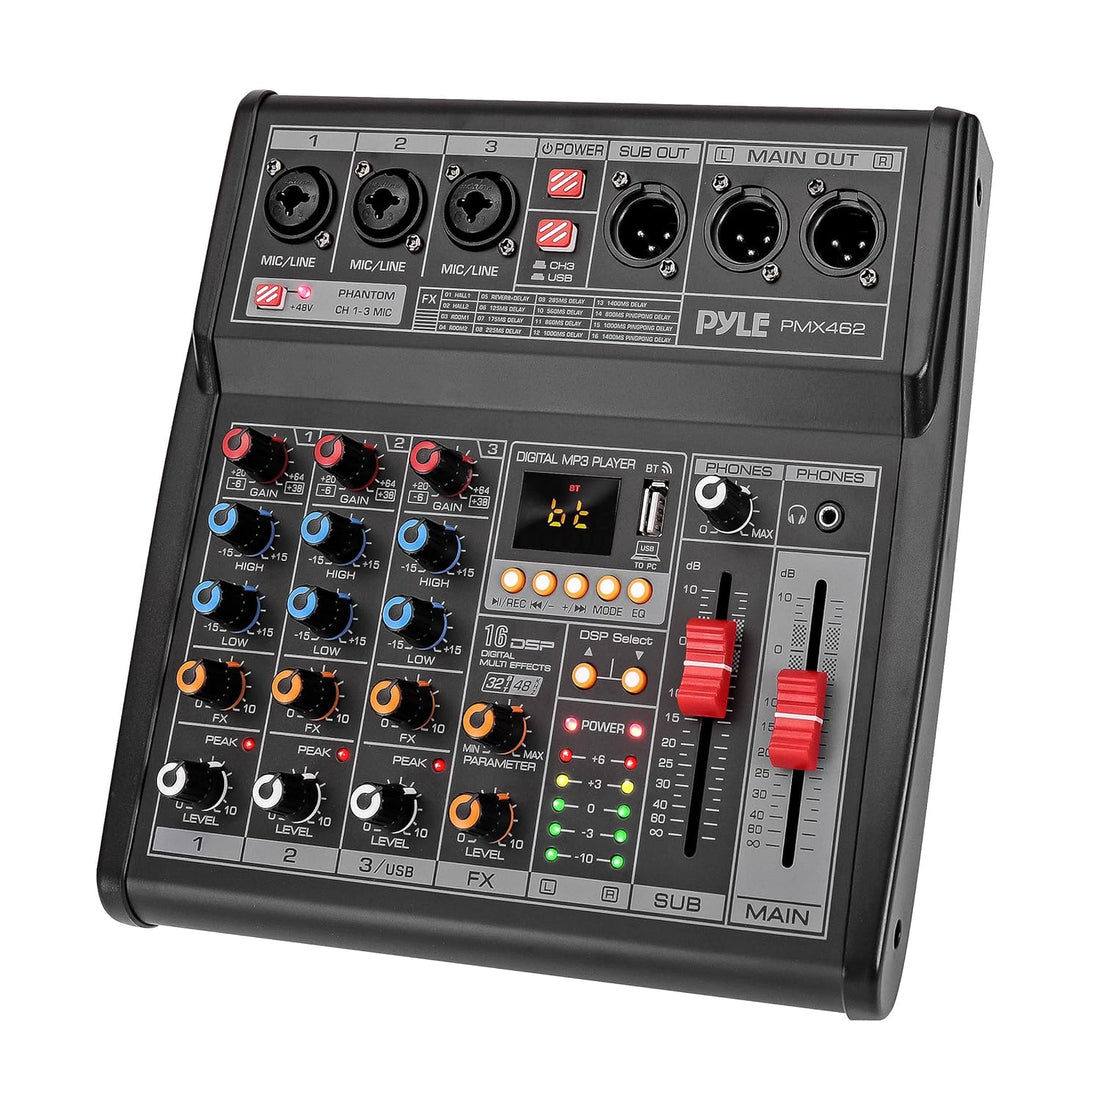 Professional DJ Audio Mixer Controller - 3-Channel DJ Controller Sound Mixer w/ DSP 16 Preset Effects, USB Interface, 3 Mic/Line Input, Built-in FX Processor MP3 Player, Headphone Jack - Pyle PMX462